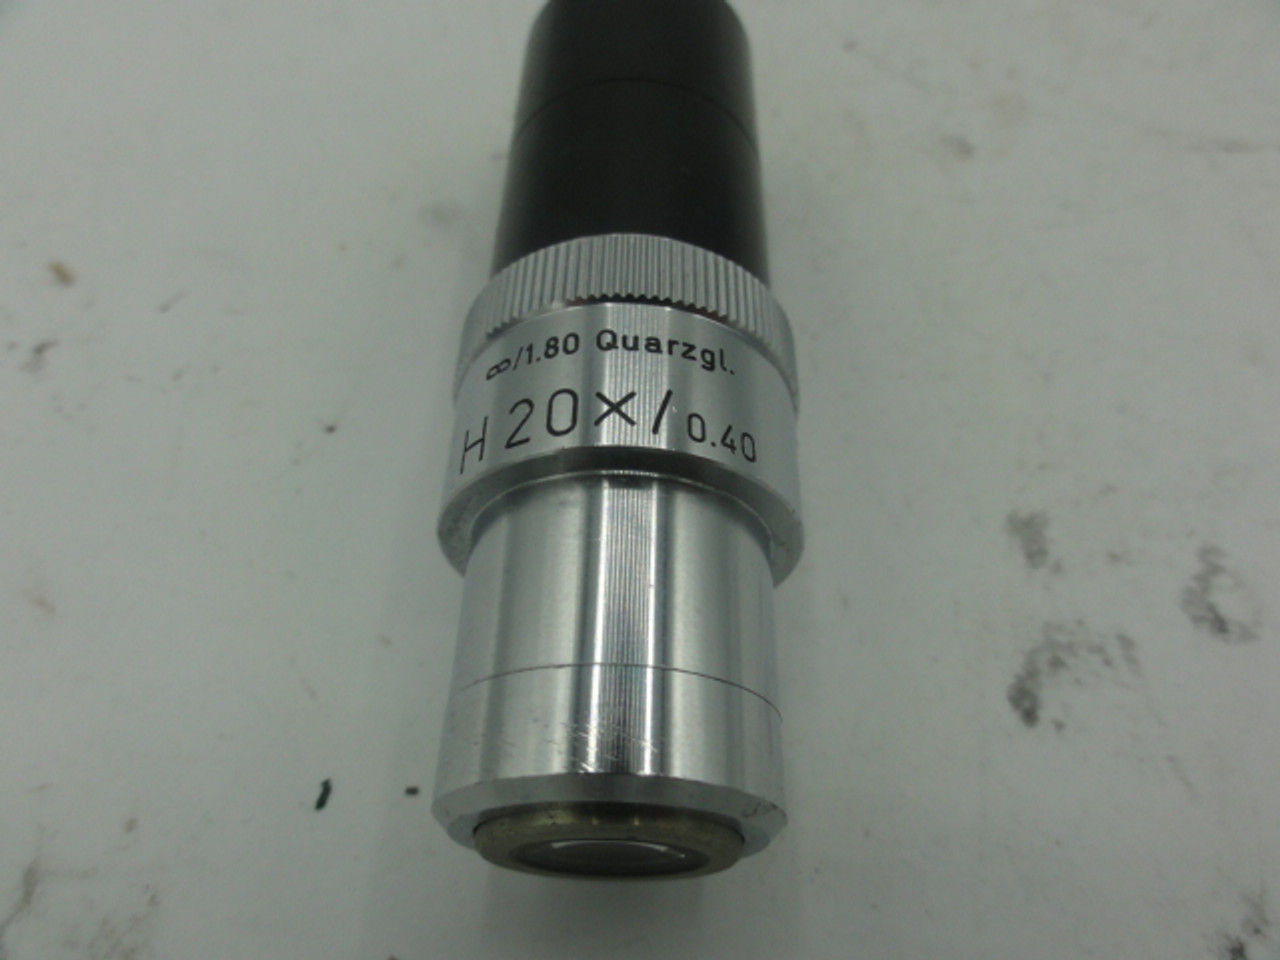 Leitz H20 X /0.40 Microscope Objective